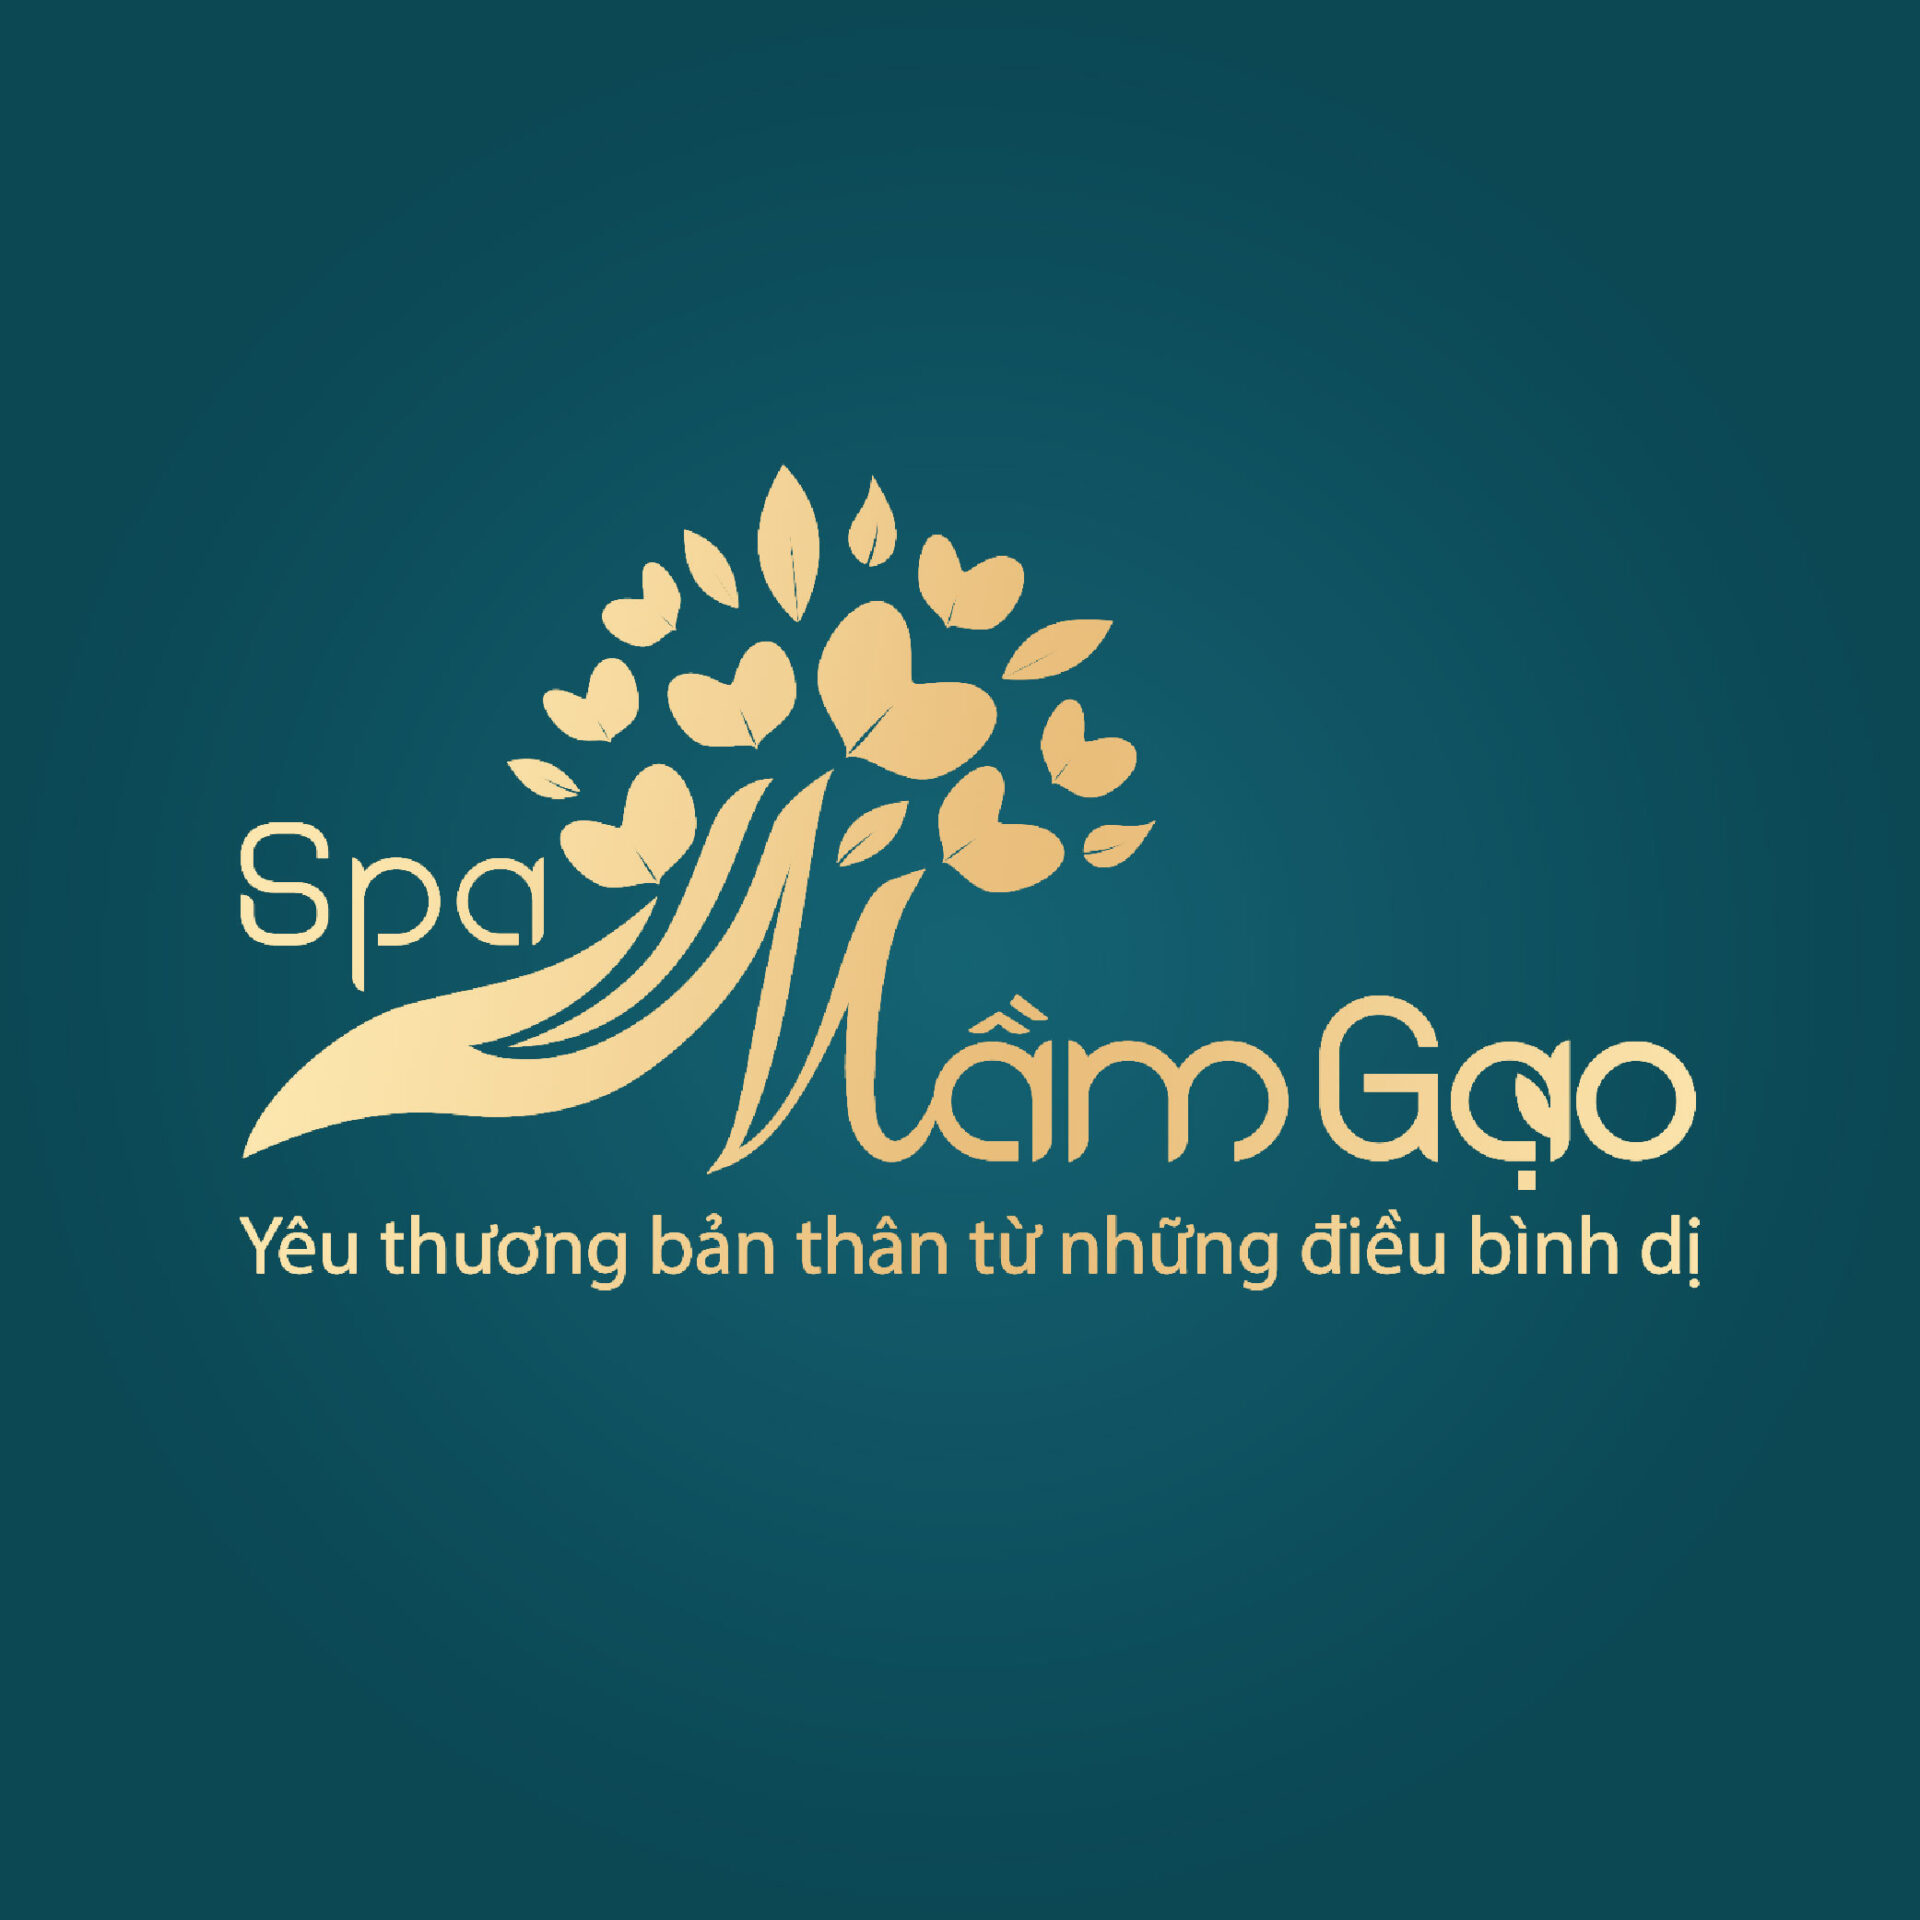 Mam Gao Spa logo 02 scaled